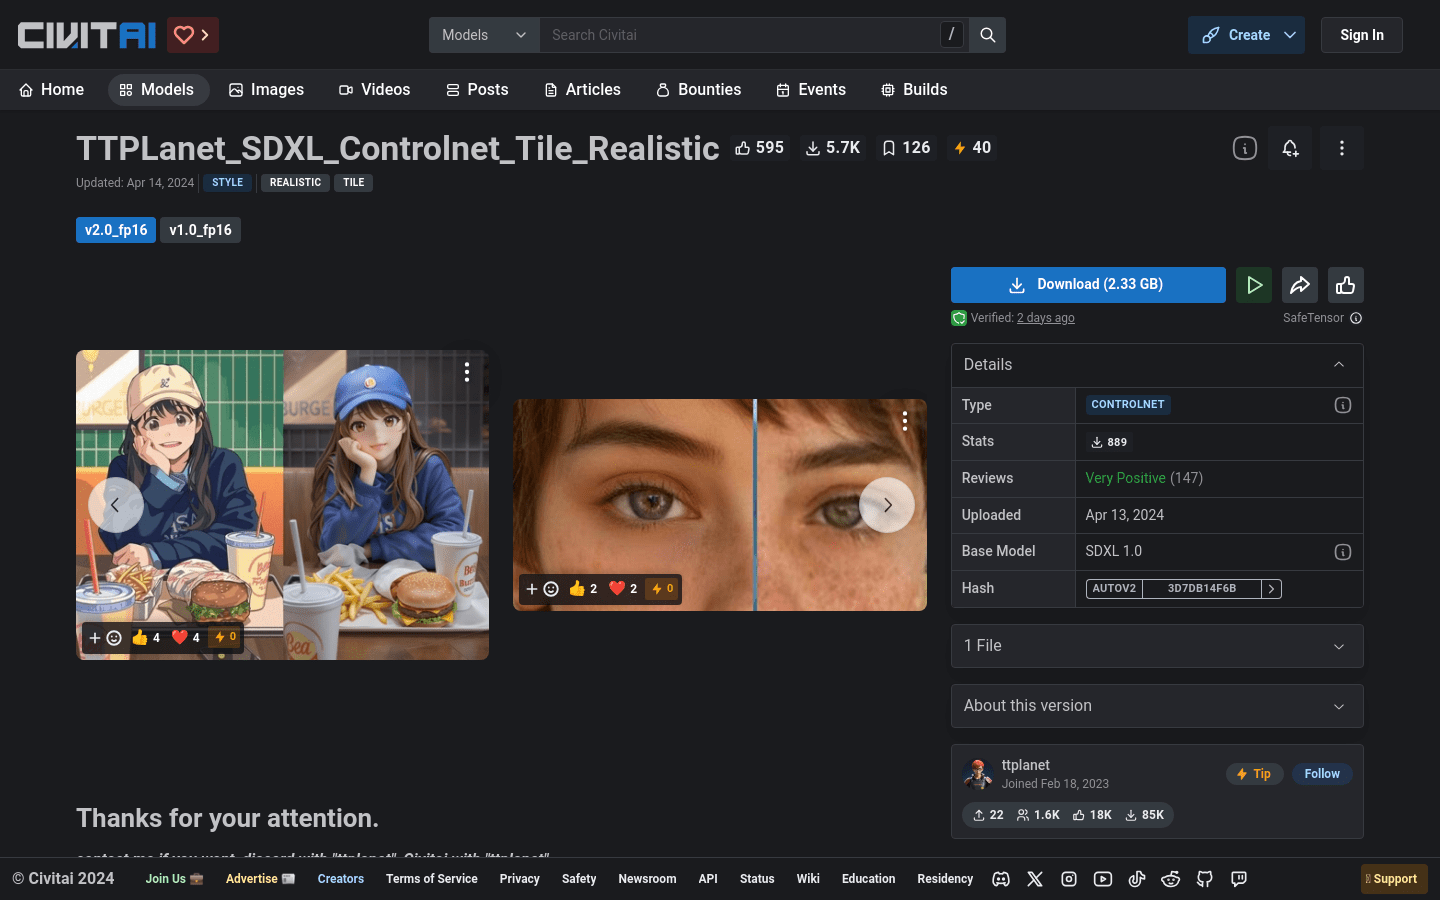 TTPLanet_SDXL_Controlnet_Tile_Realistic